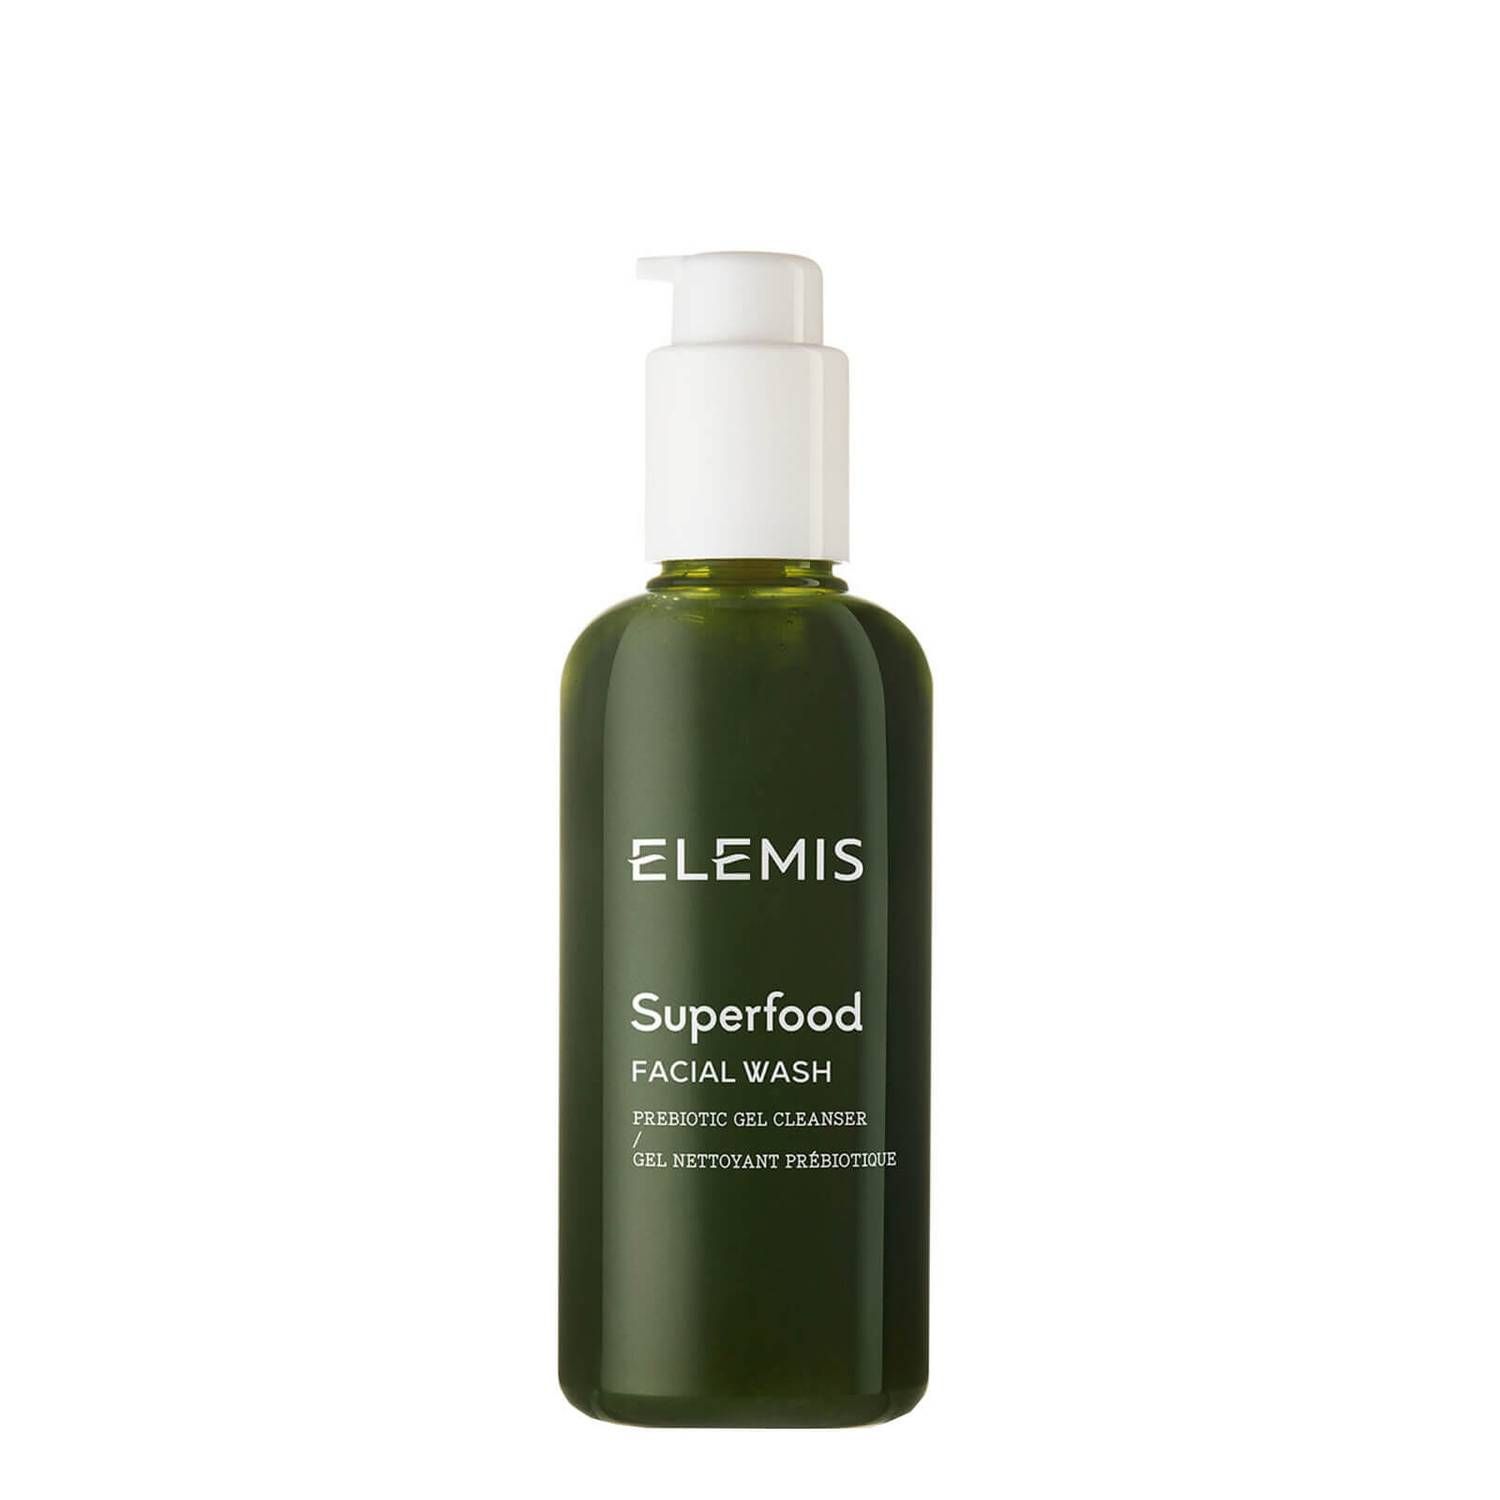 ELEMIS Superfood Facial Wash (200 ml.) | Dermstore (US)